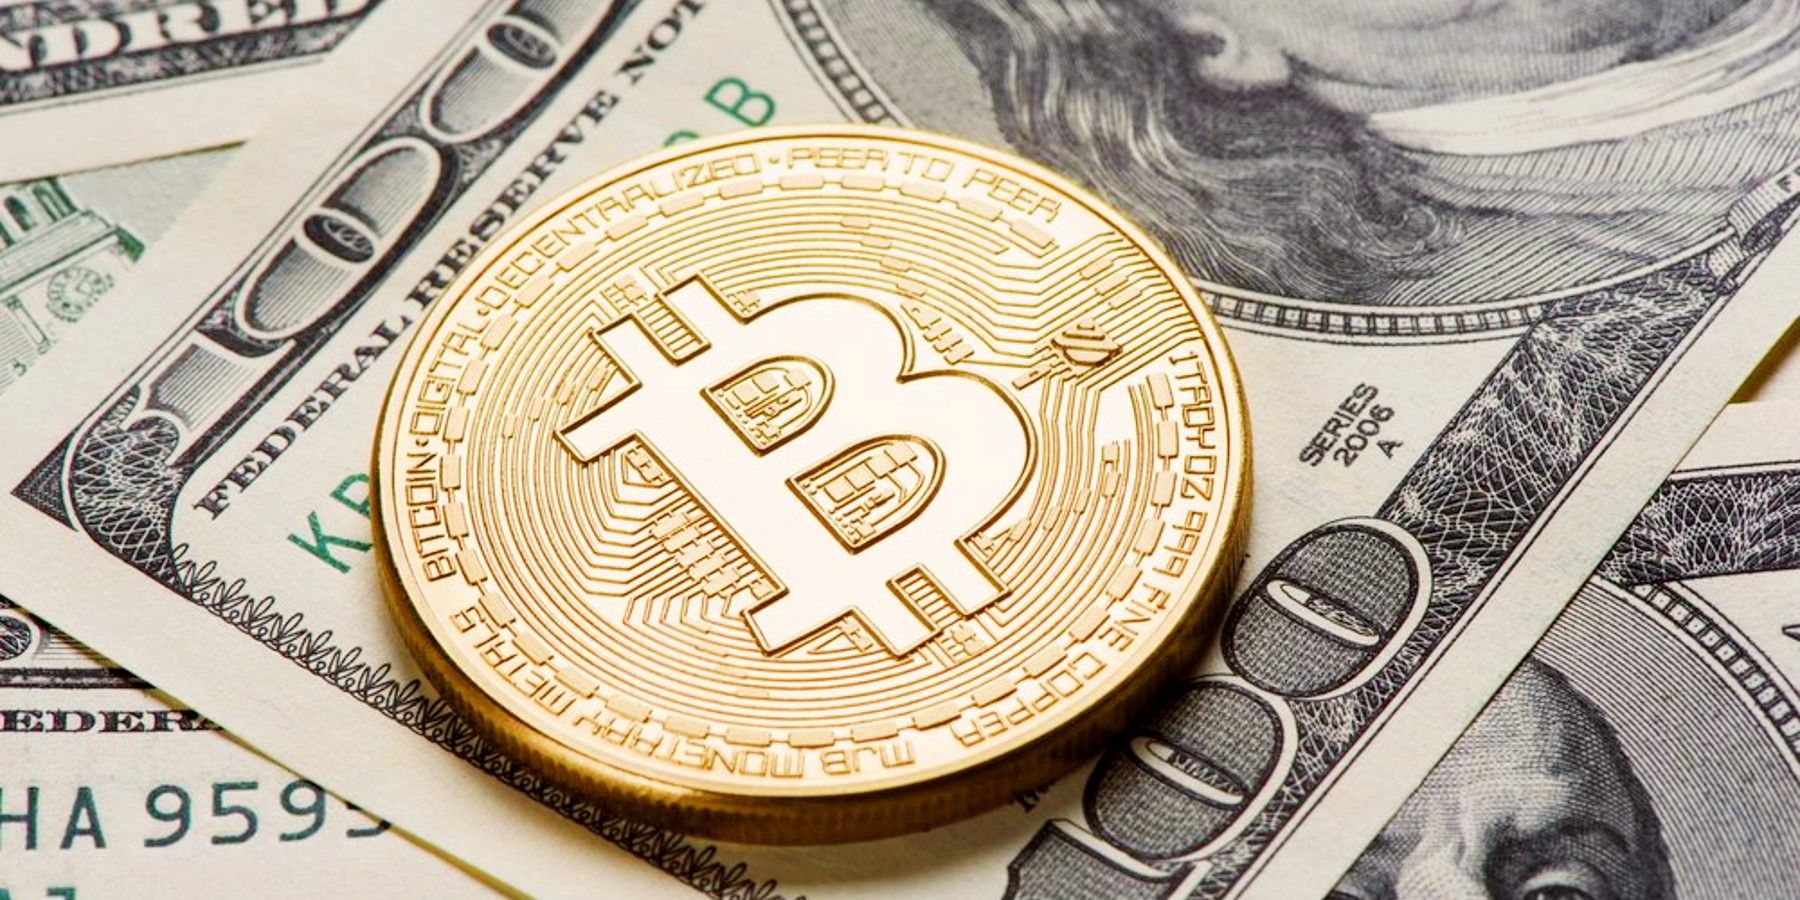 How Do You Cash Out Bitcoin Or Other Cryptos?